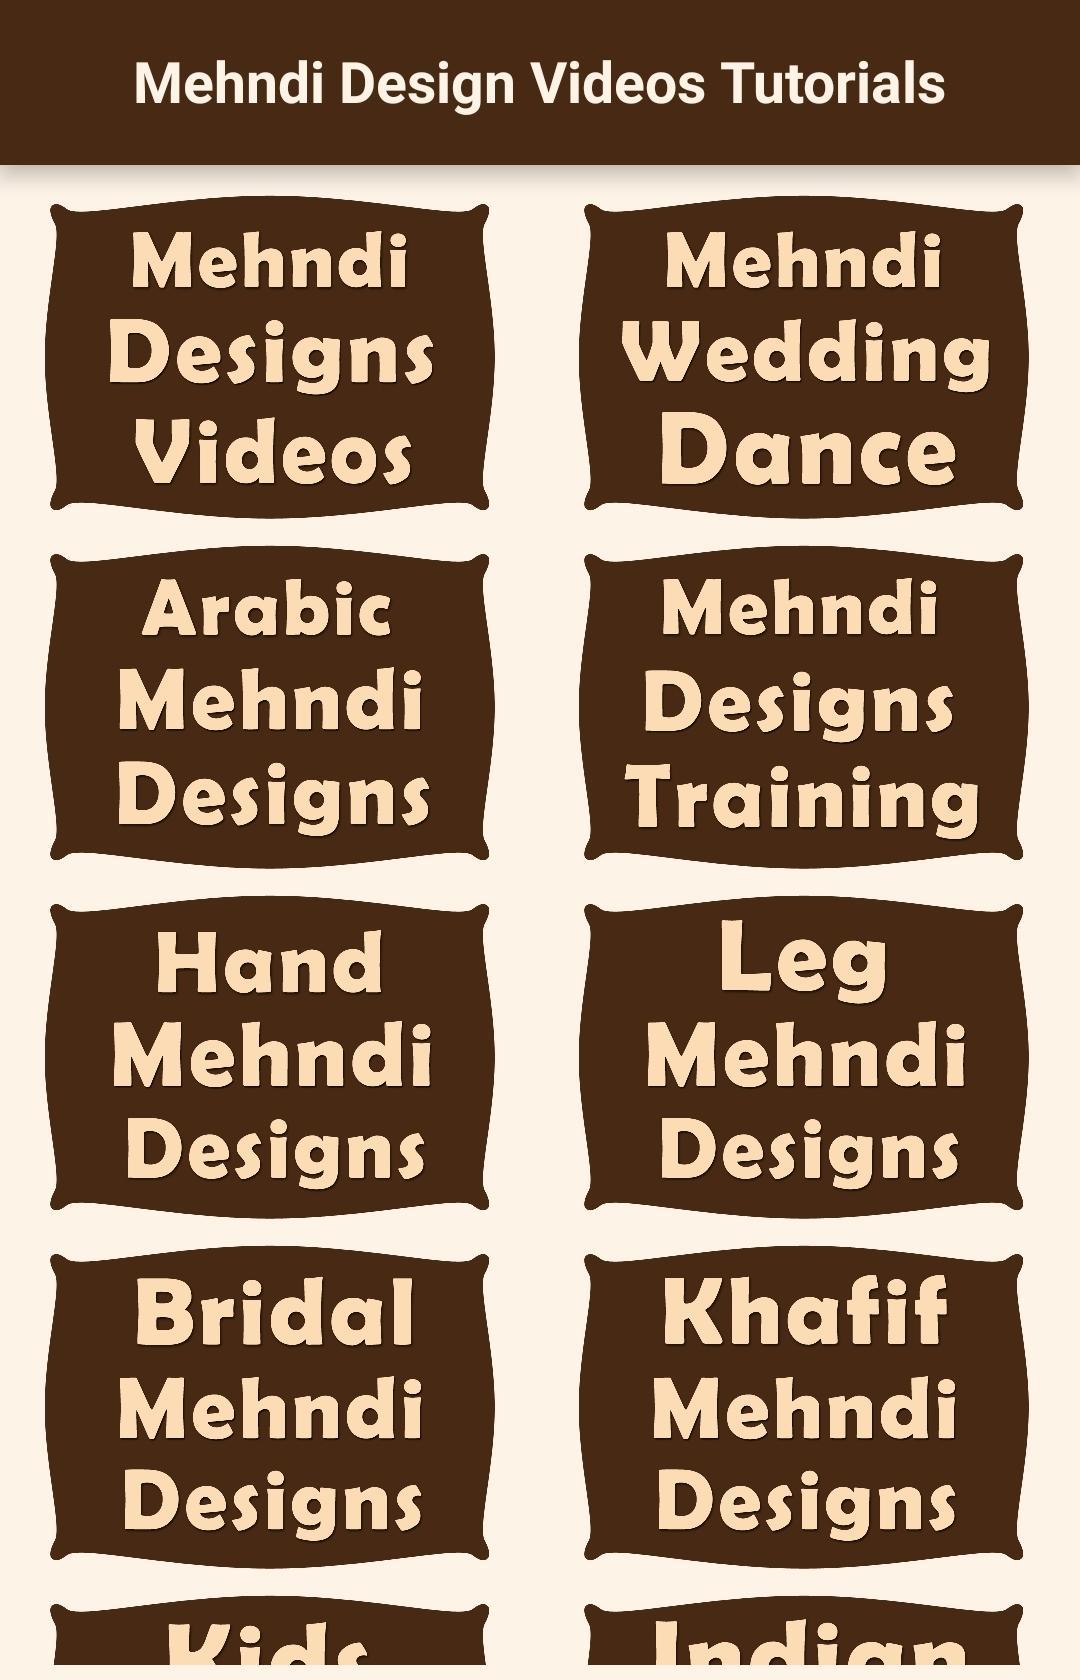 Mehndi Design Videos Tutorials For Android Apk Download